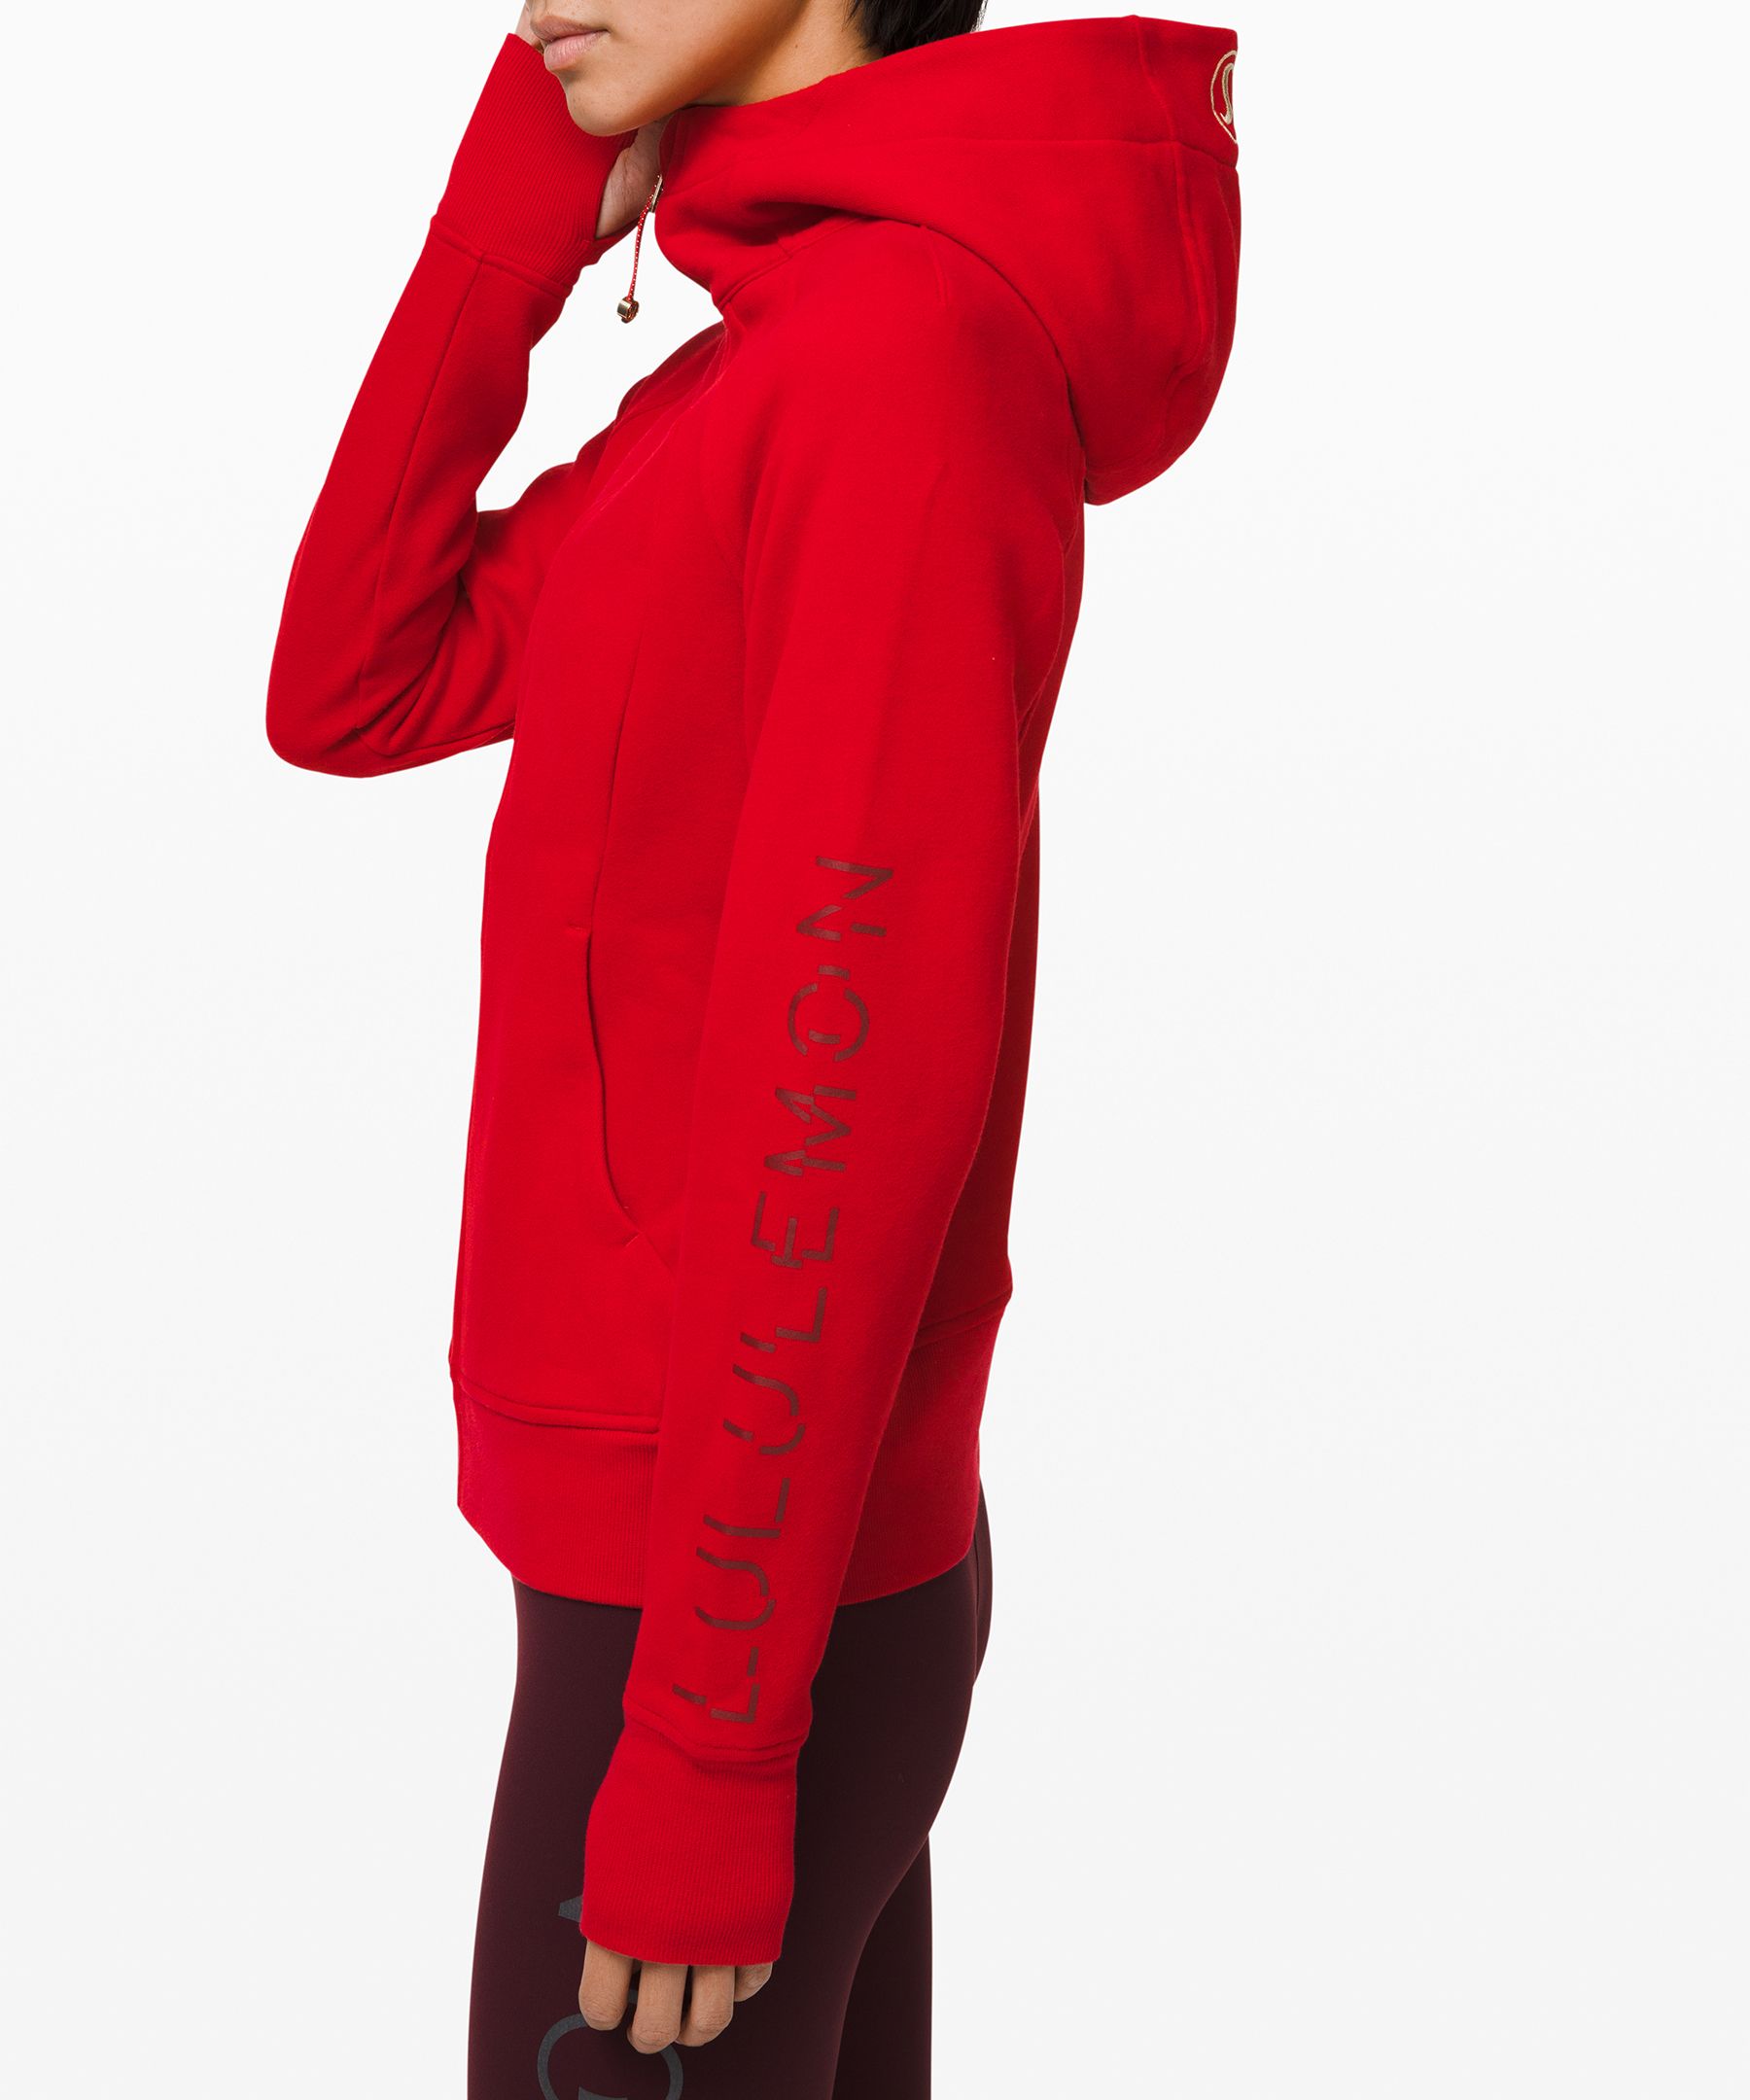 lululemon red scuba hoodie